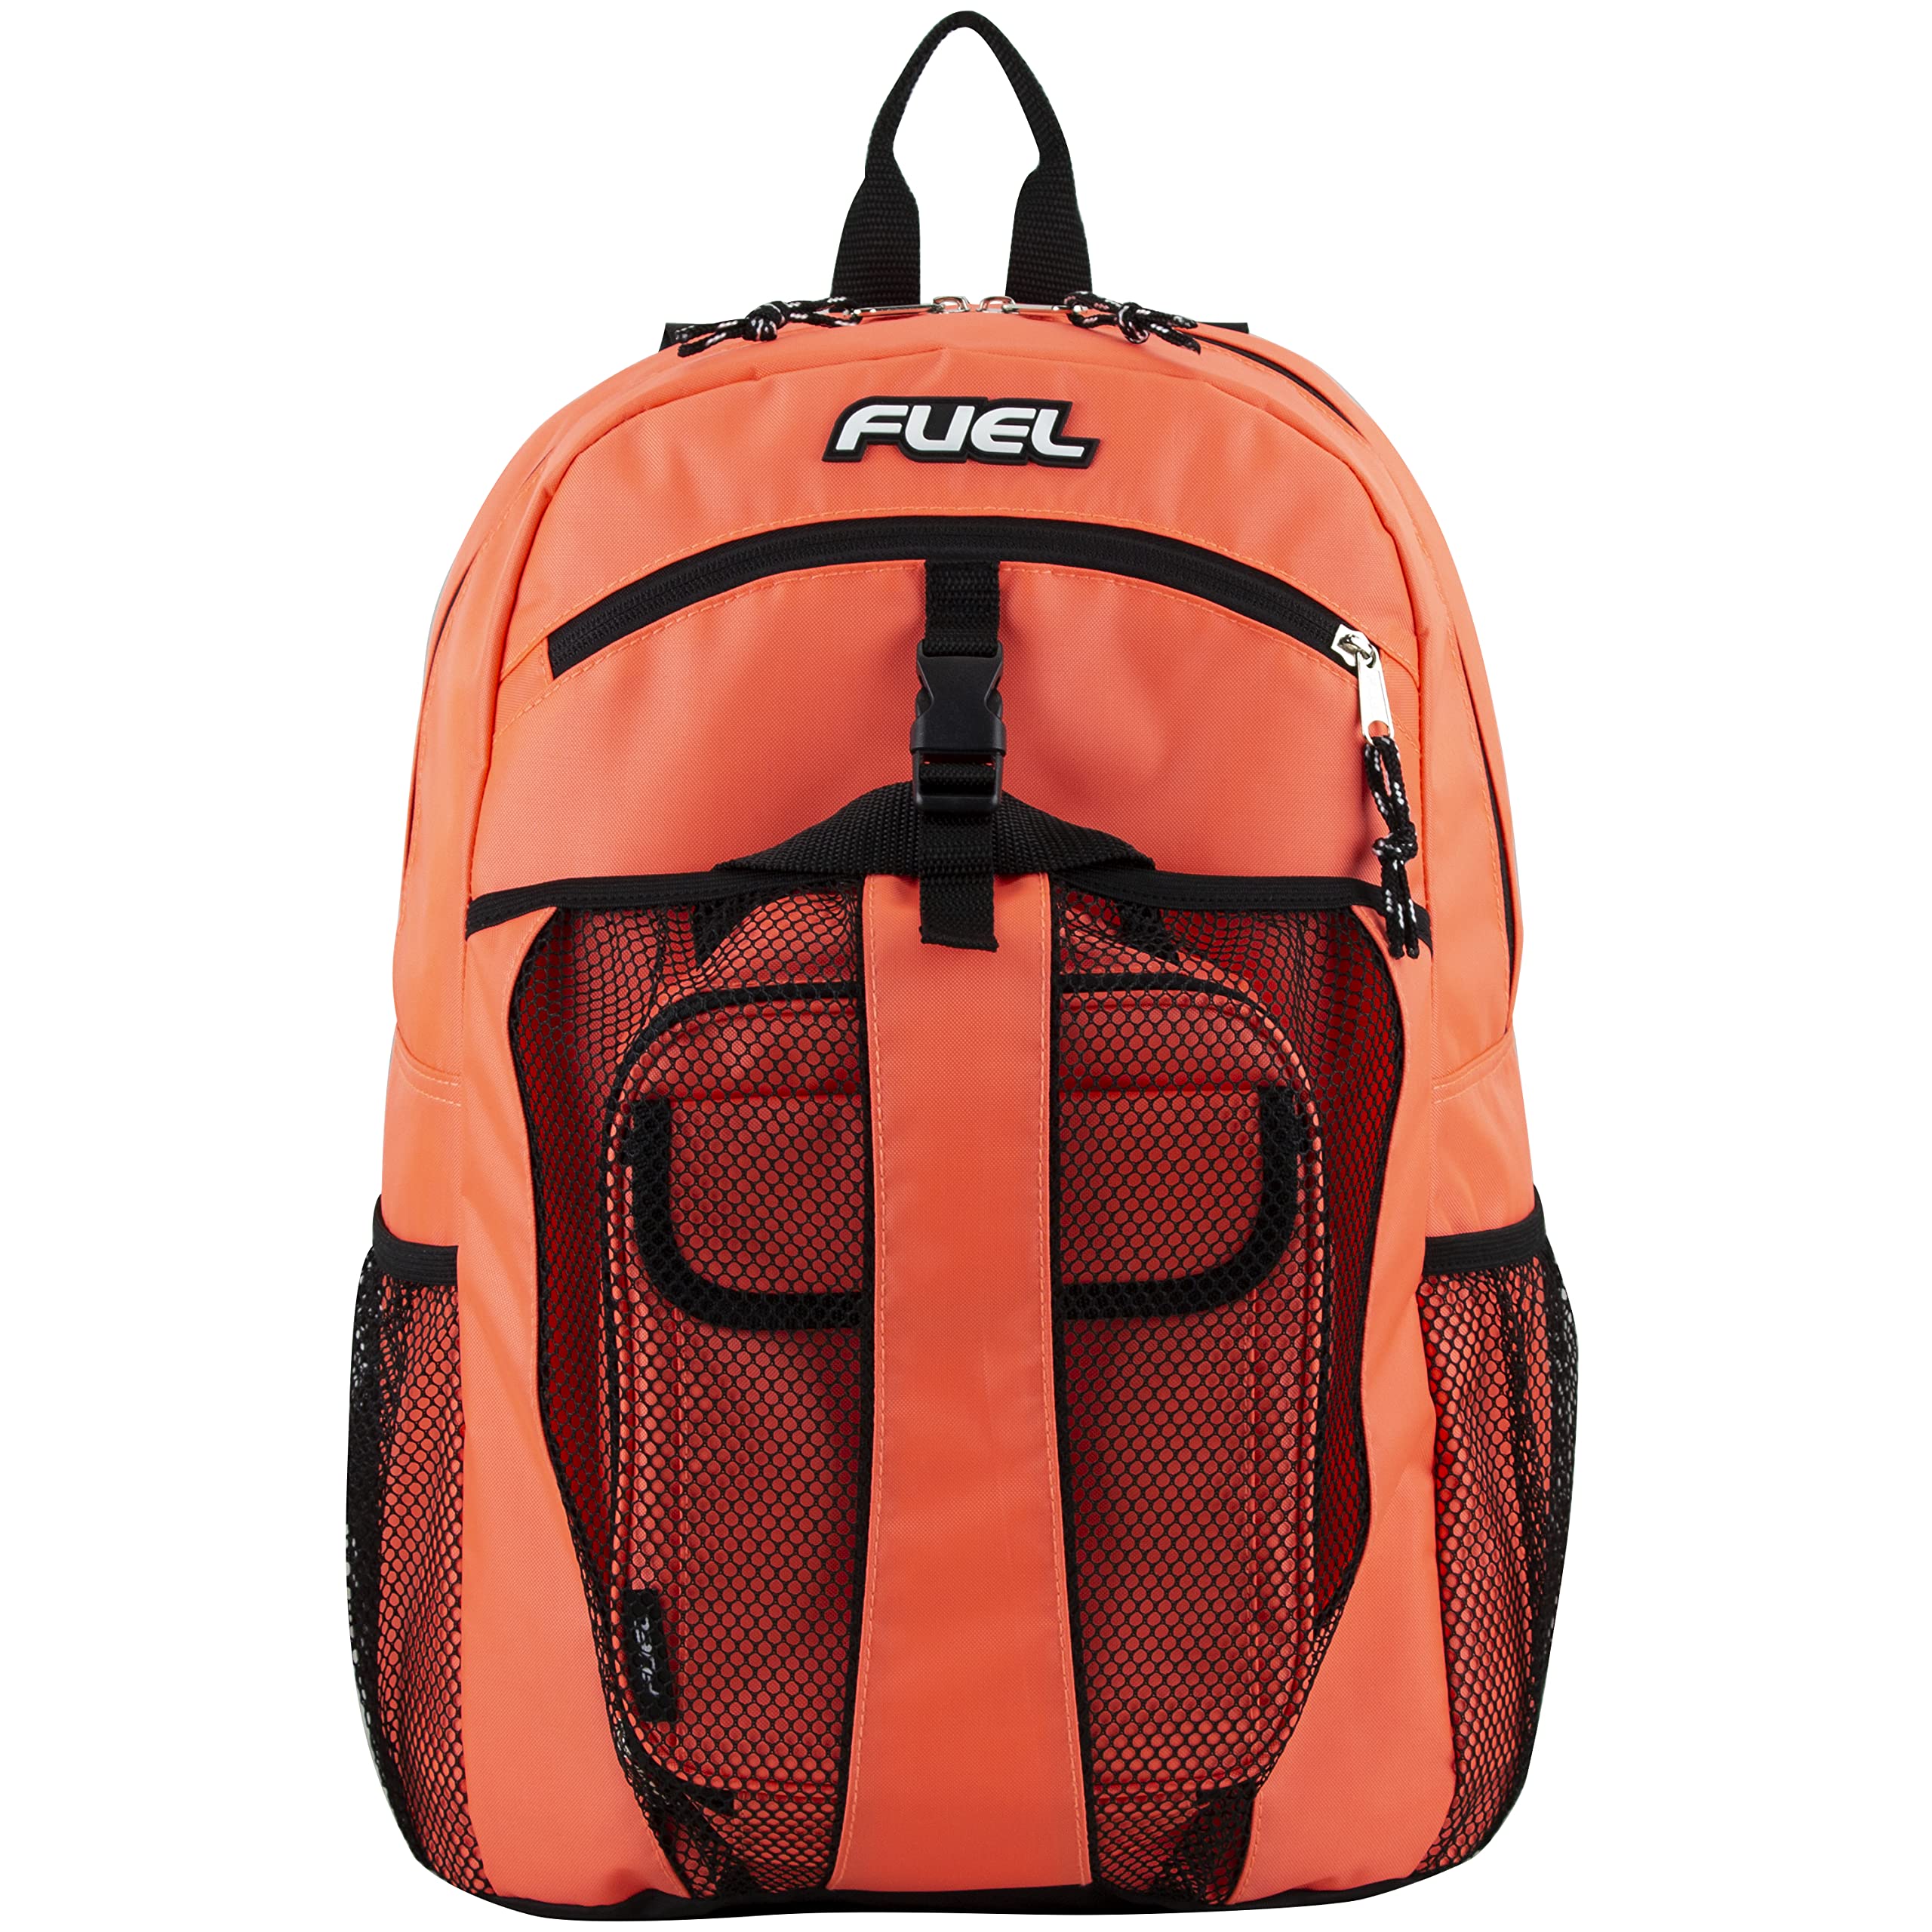 FUEL Backpack & Lunch Bag Bundle, Coral Sizzle